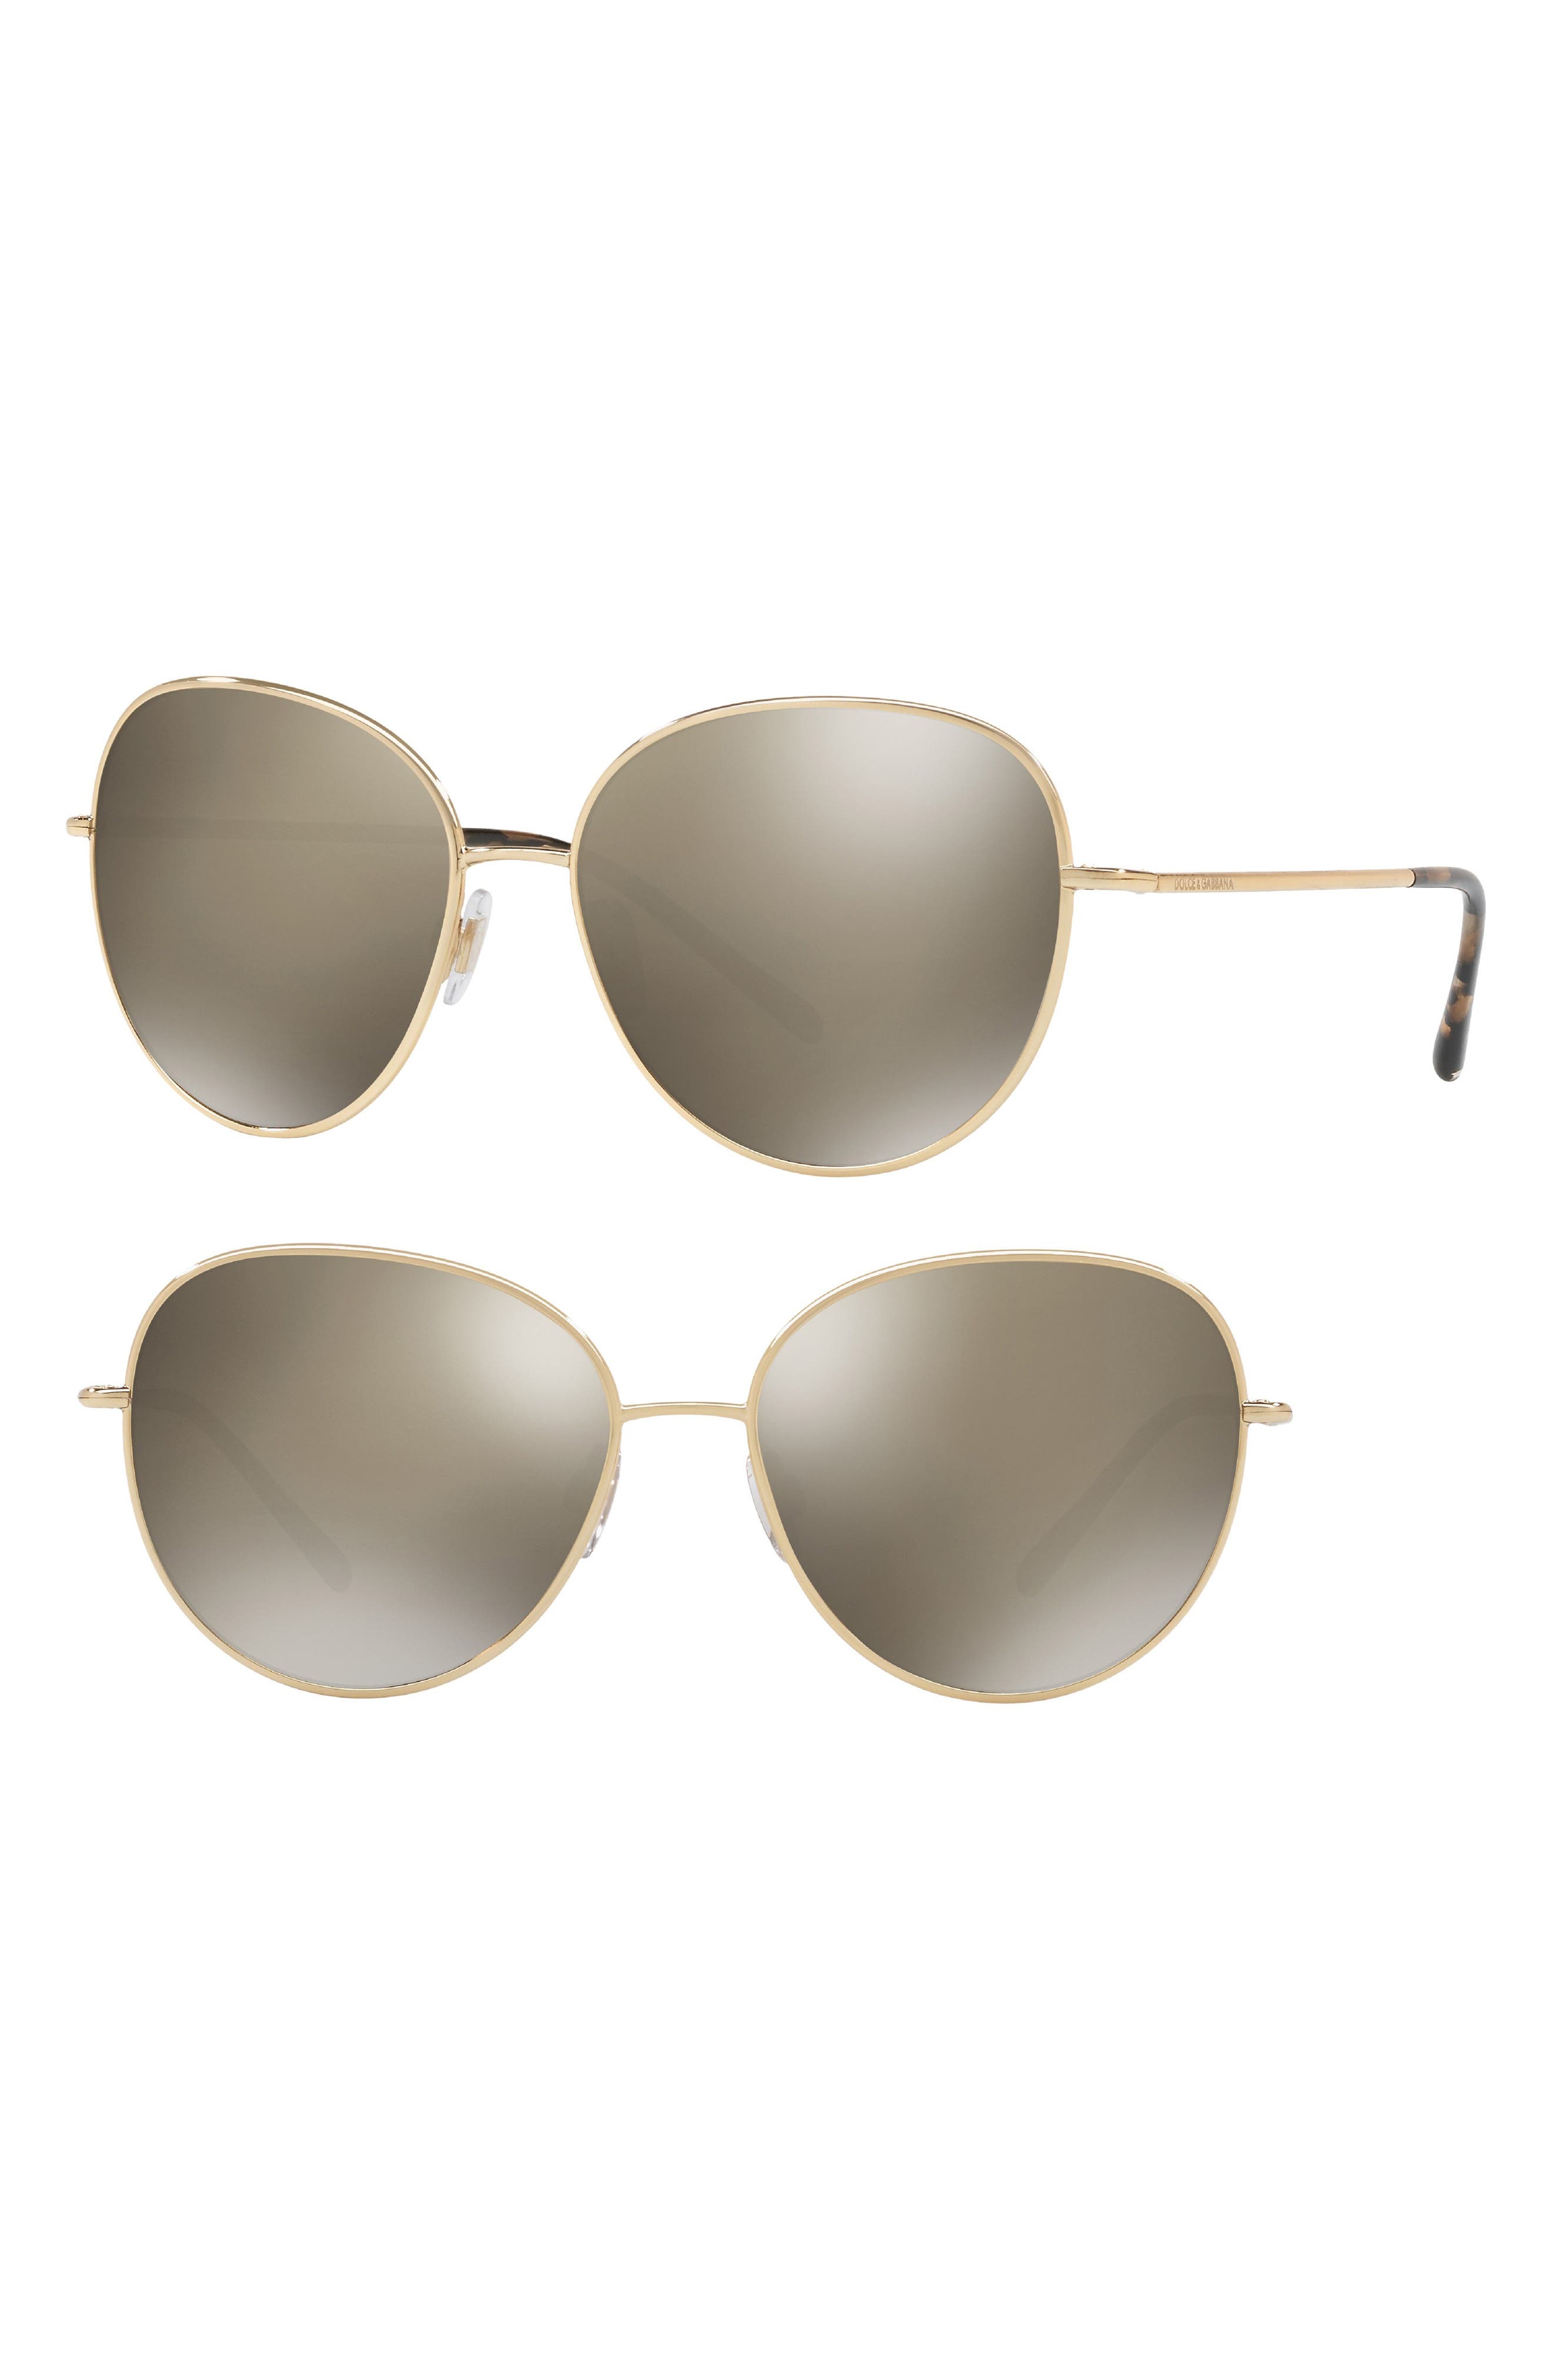 dolce and gabbana sunglasses nordstrom rack